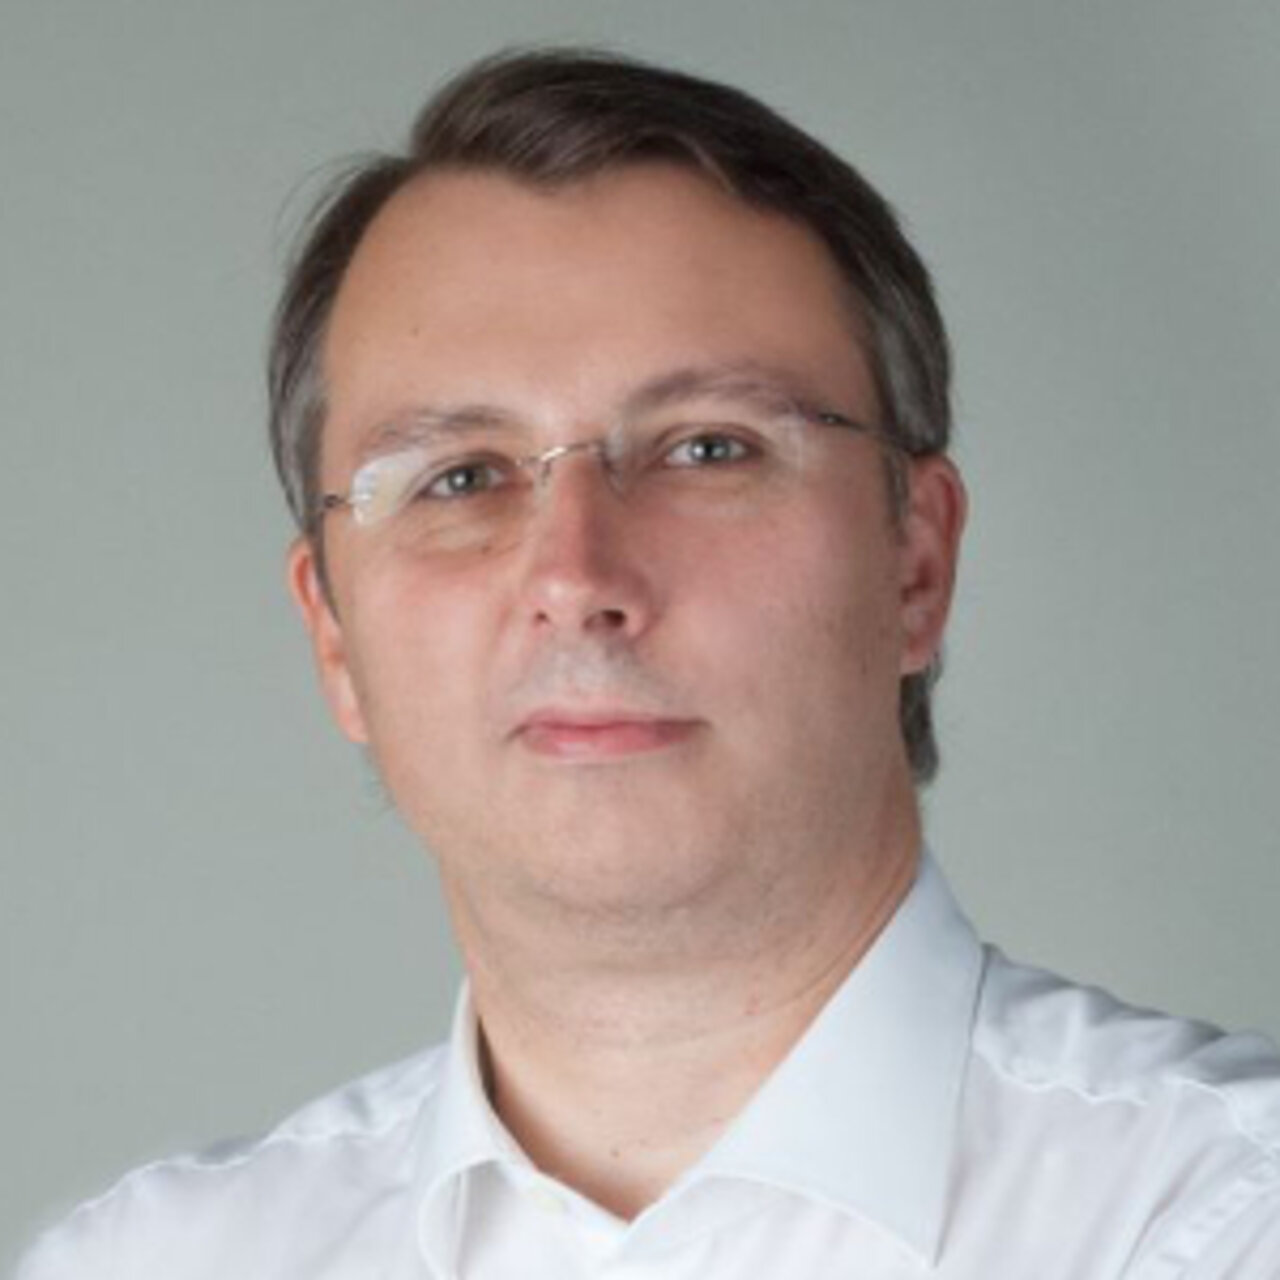 Univ.-Prof. Dr Christoph Neumayer -  Specialist in Vascular Surgery - Portrait